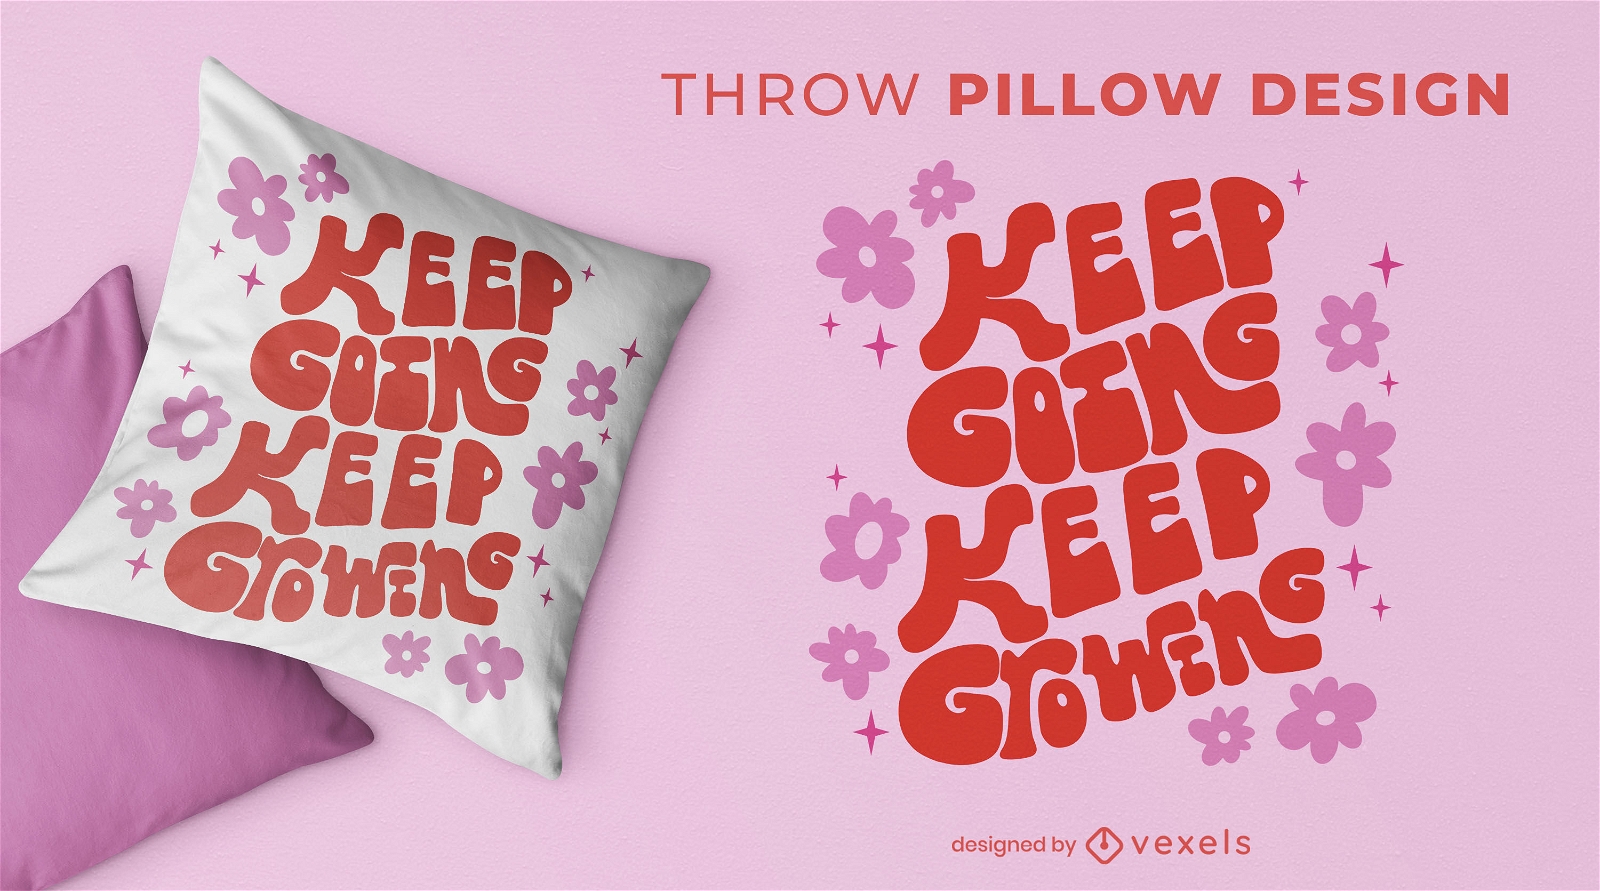 Keep growing retro throw pillow design